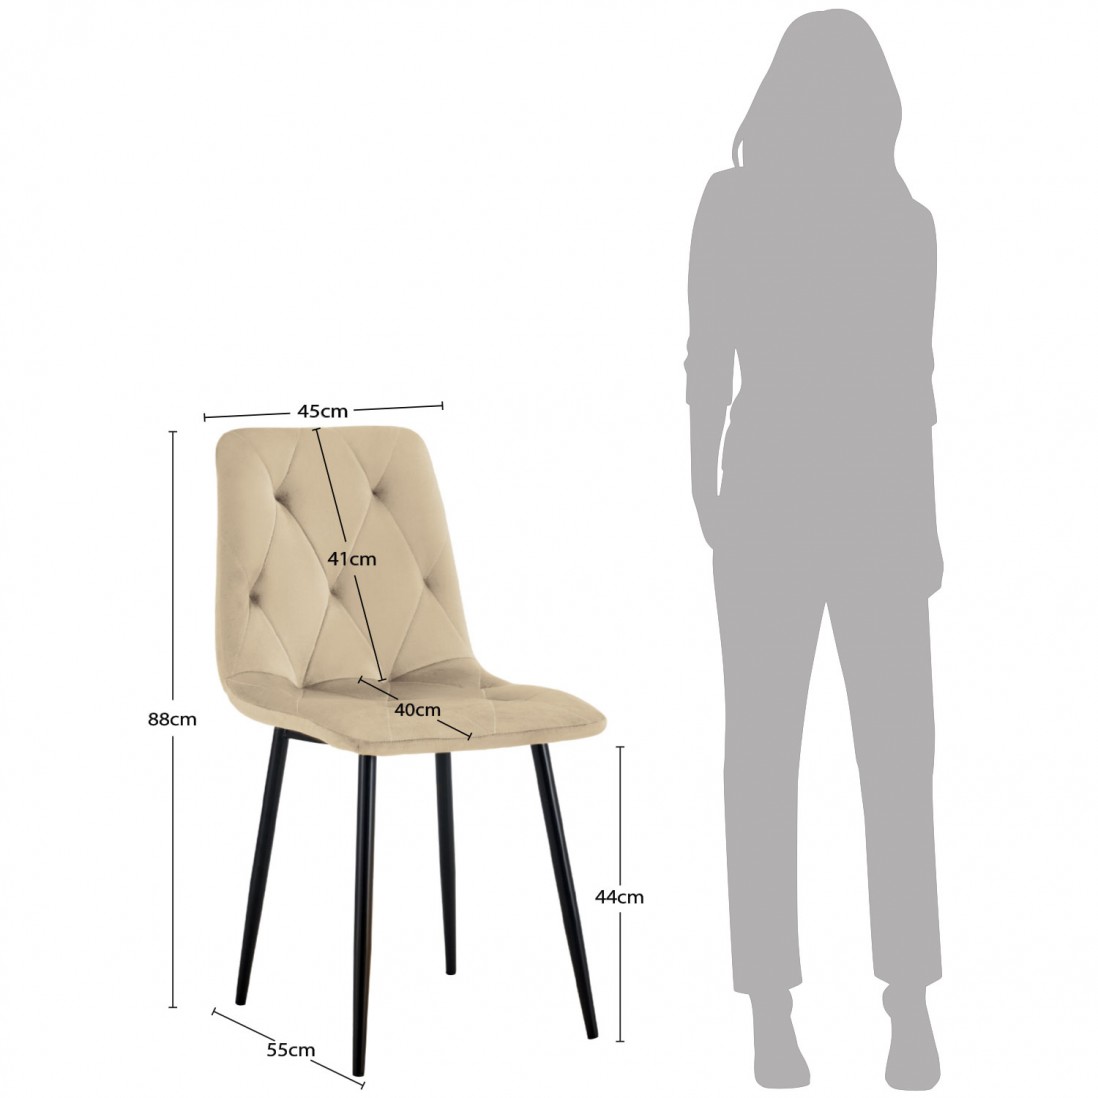 Grenoble Chair